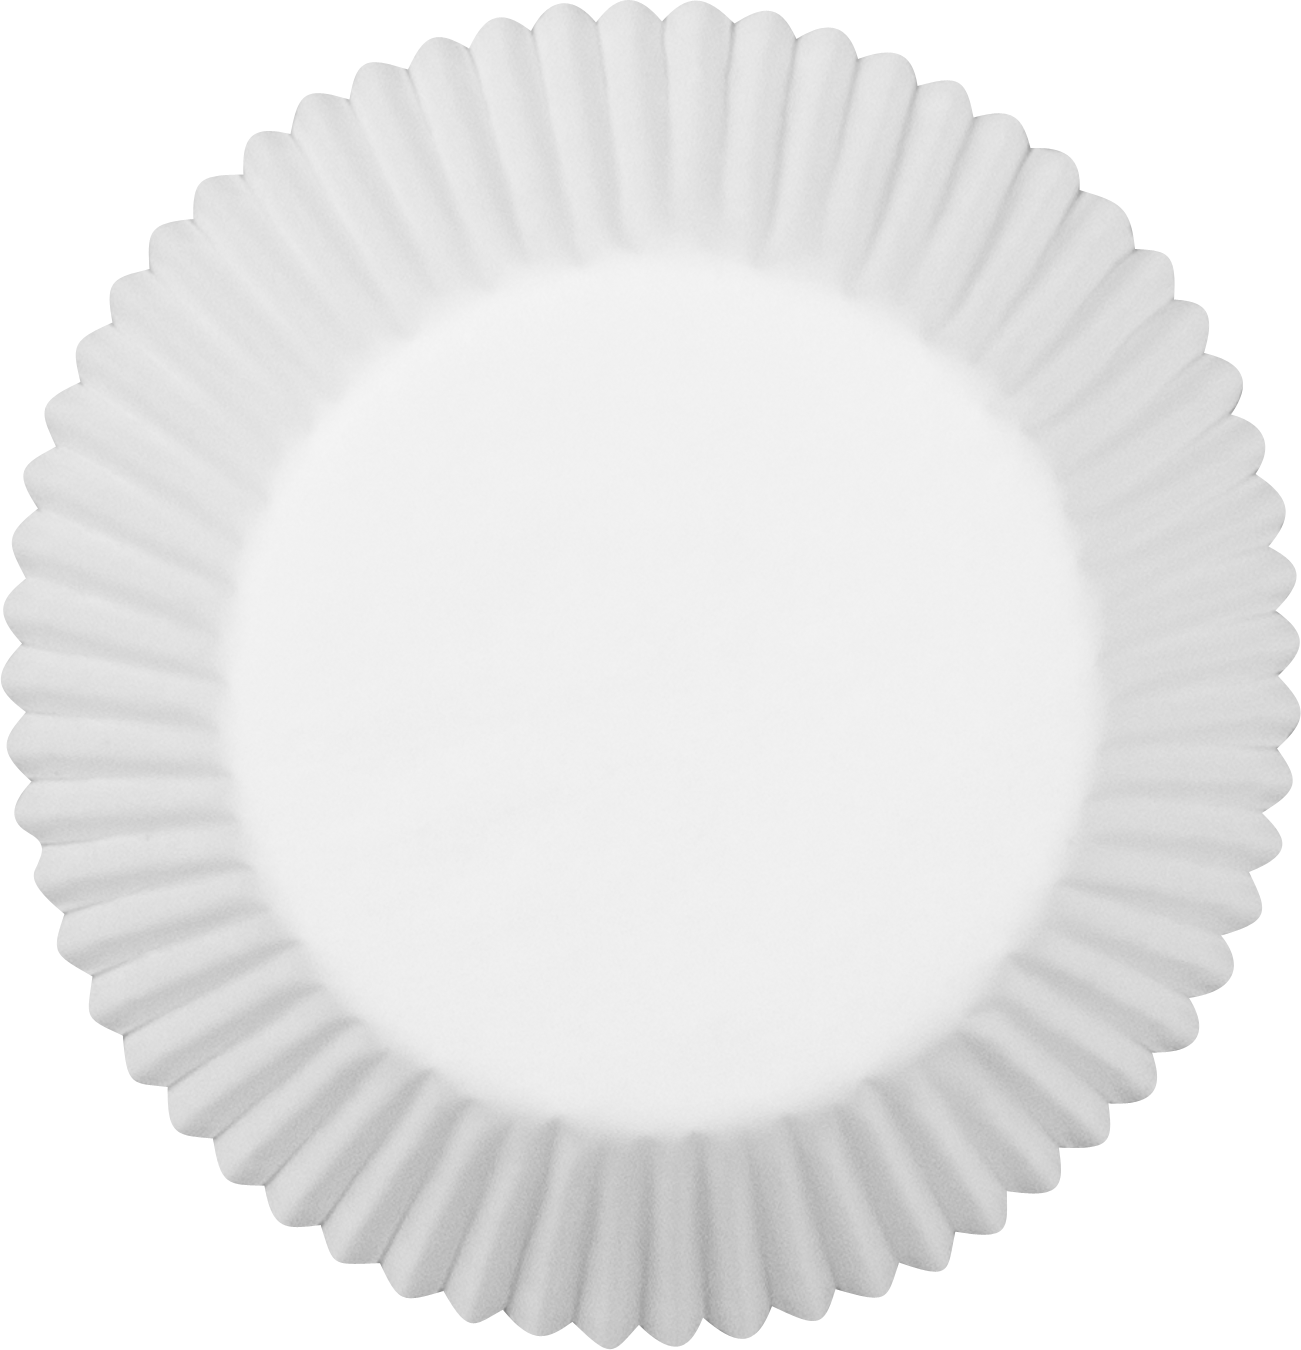 Baking cup white 5 x 3,2cm 